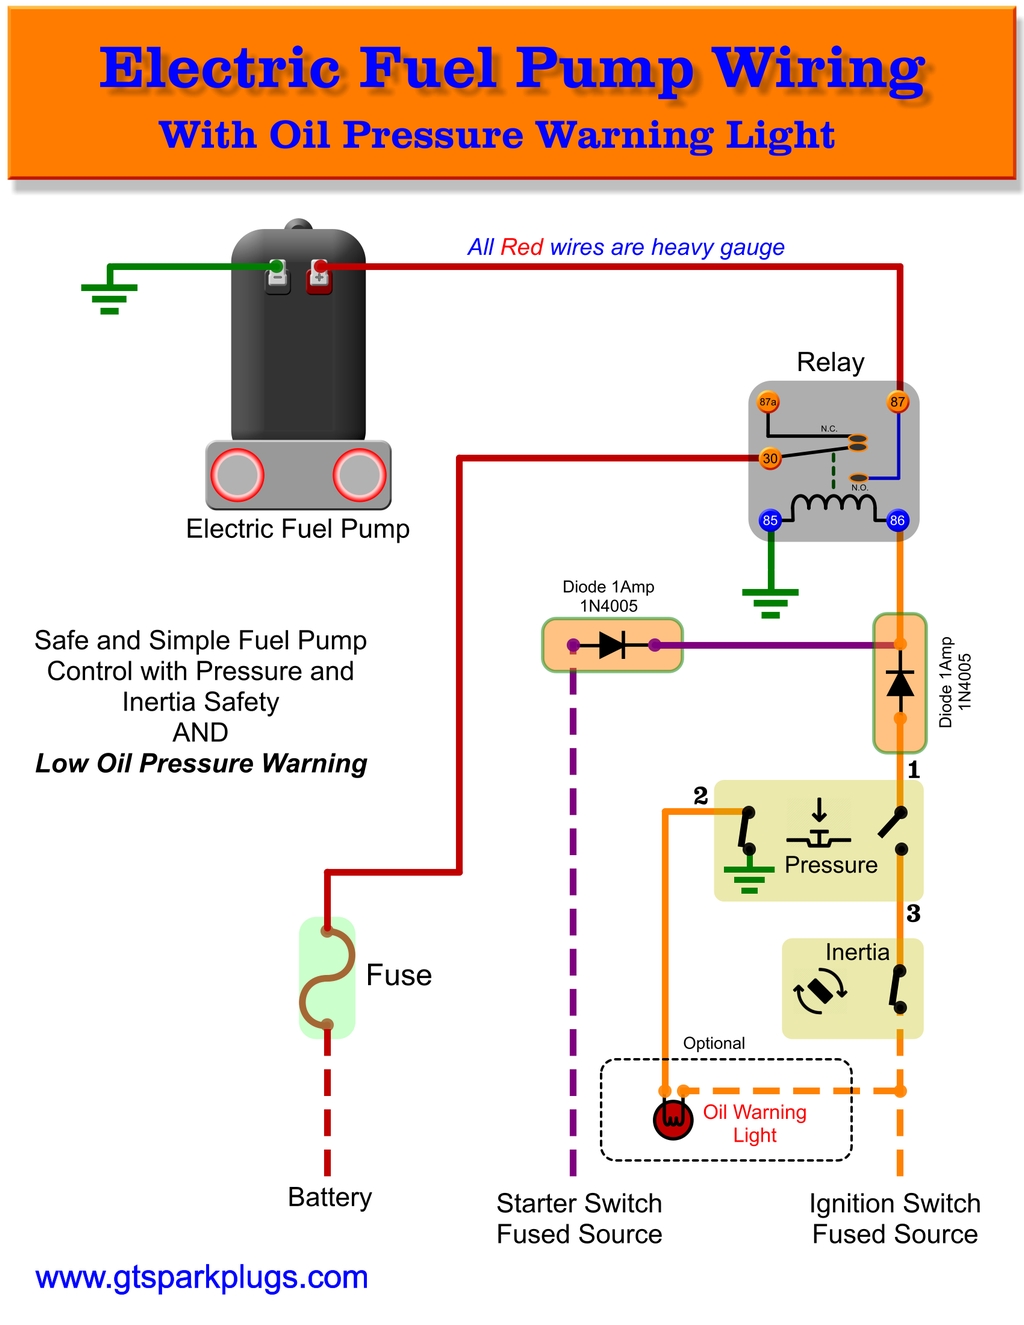 Electric Fuel Pump Wiring Diagram | GTSparkplugs